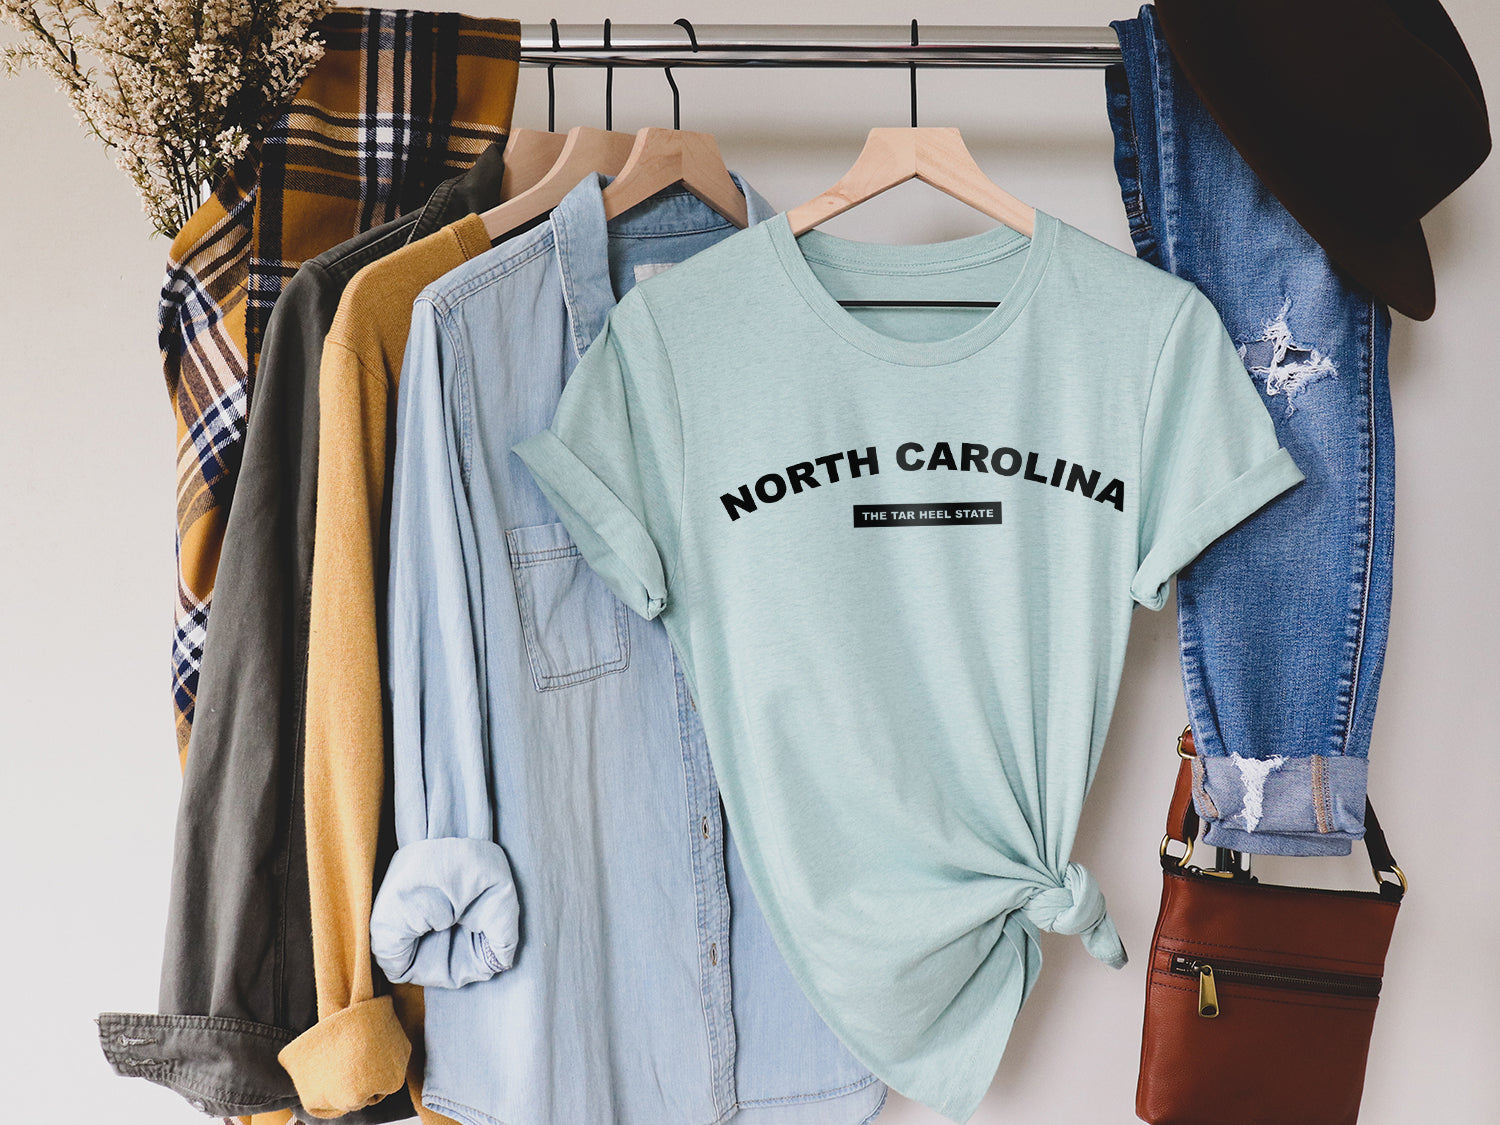 North Carolina The Tar Heel State T-shirt - United States Name & Slogan Minimal Design Printed Tee Shirt